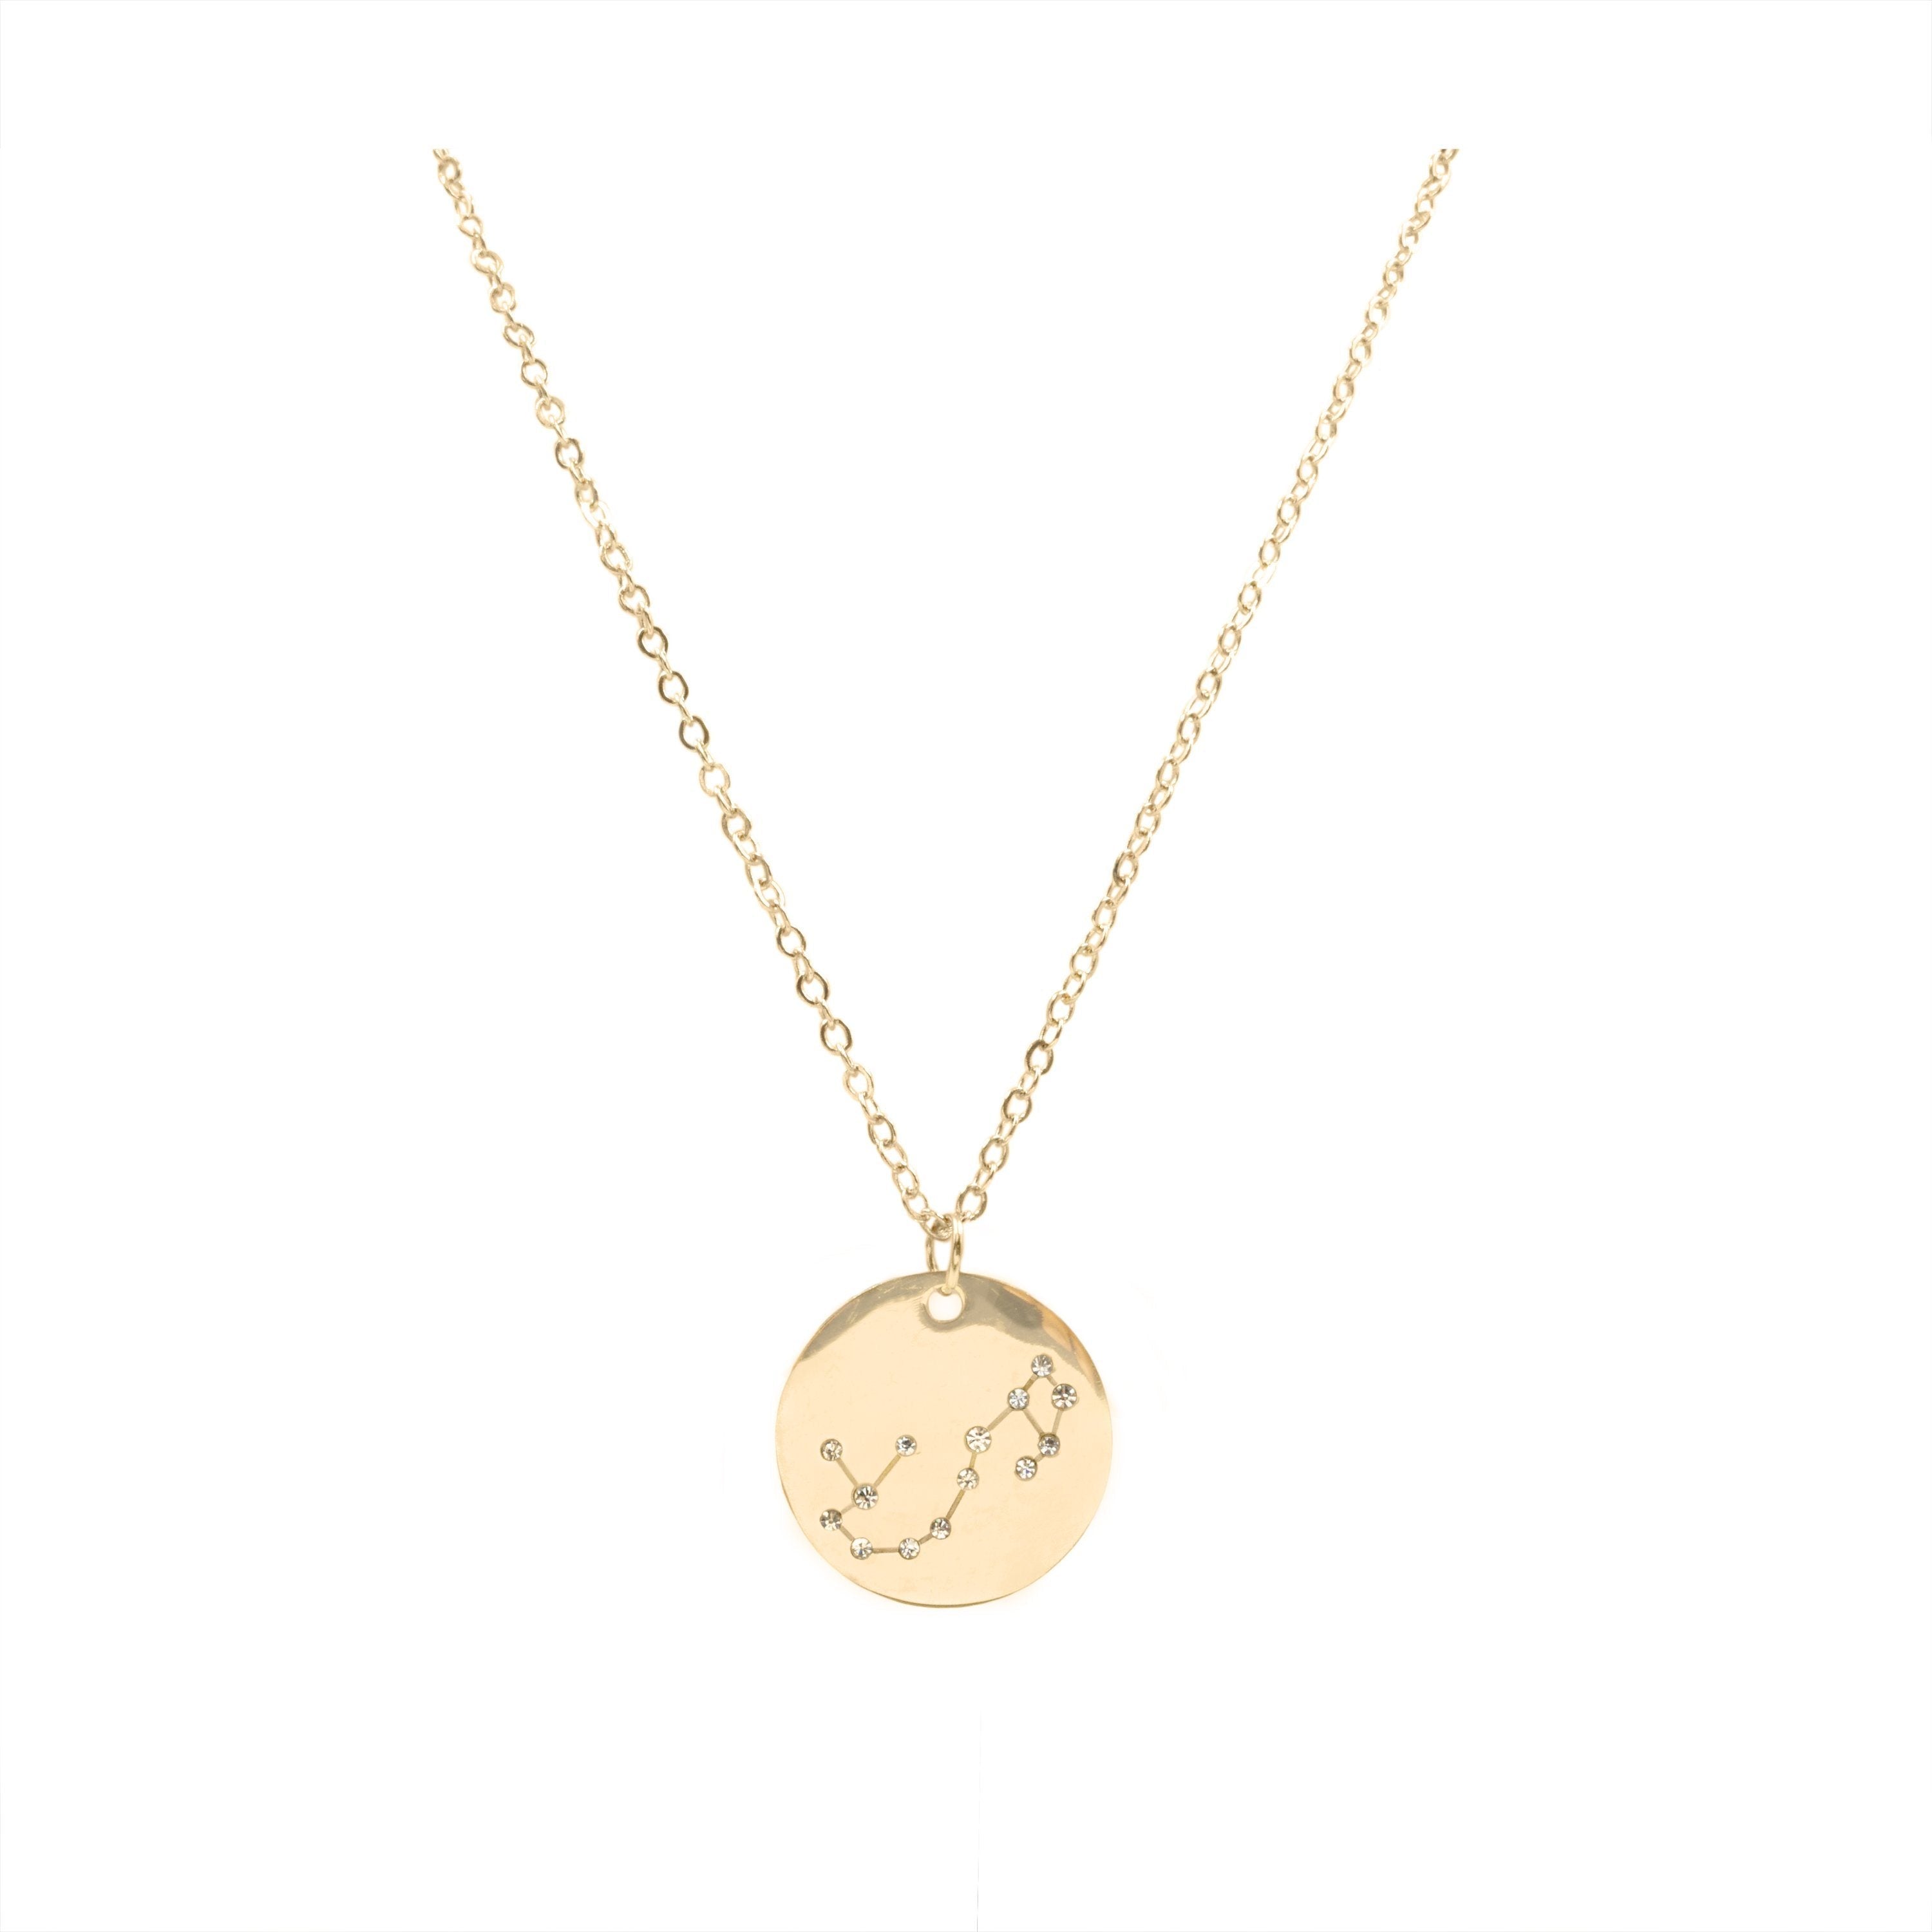 Zodiac Collection - Scorpio Necklace (Oct 23 - Nov 21) fine designer jewelry for men and women